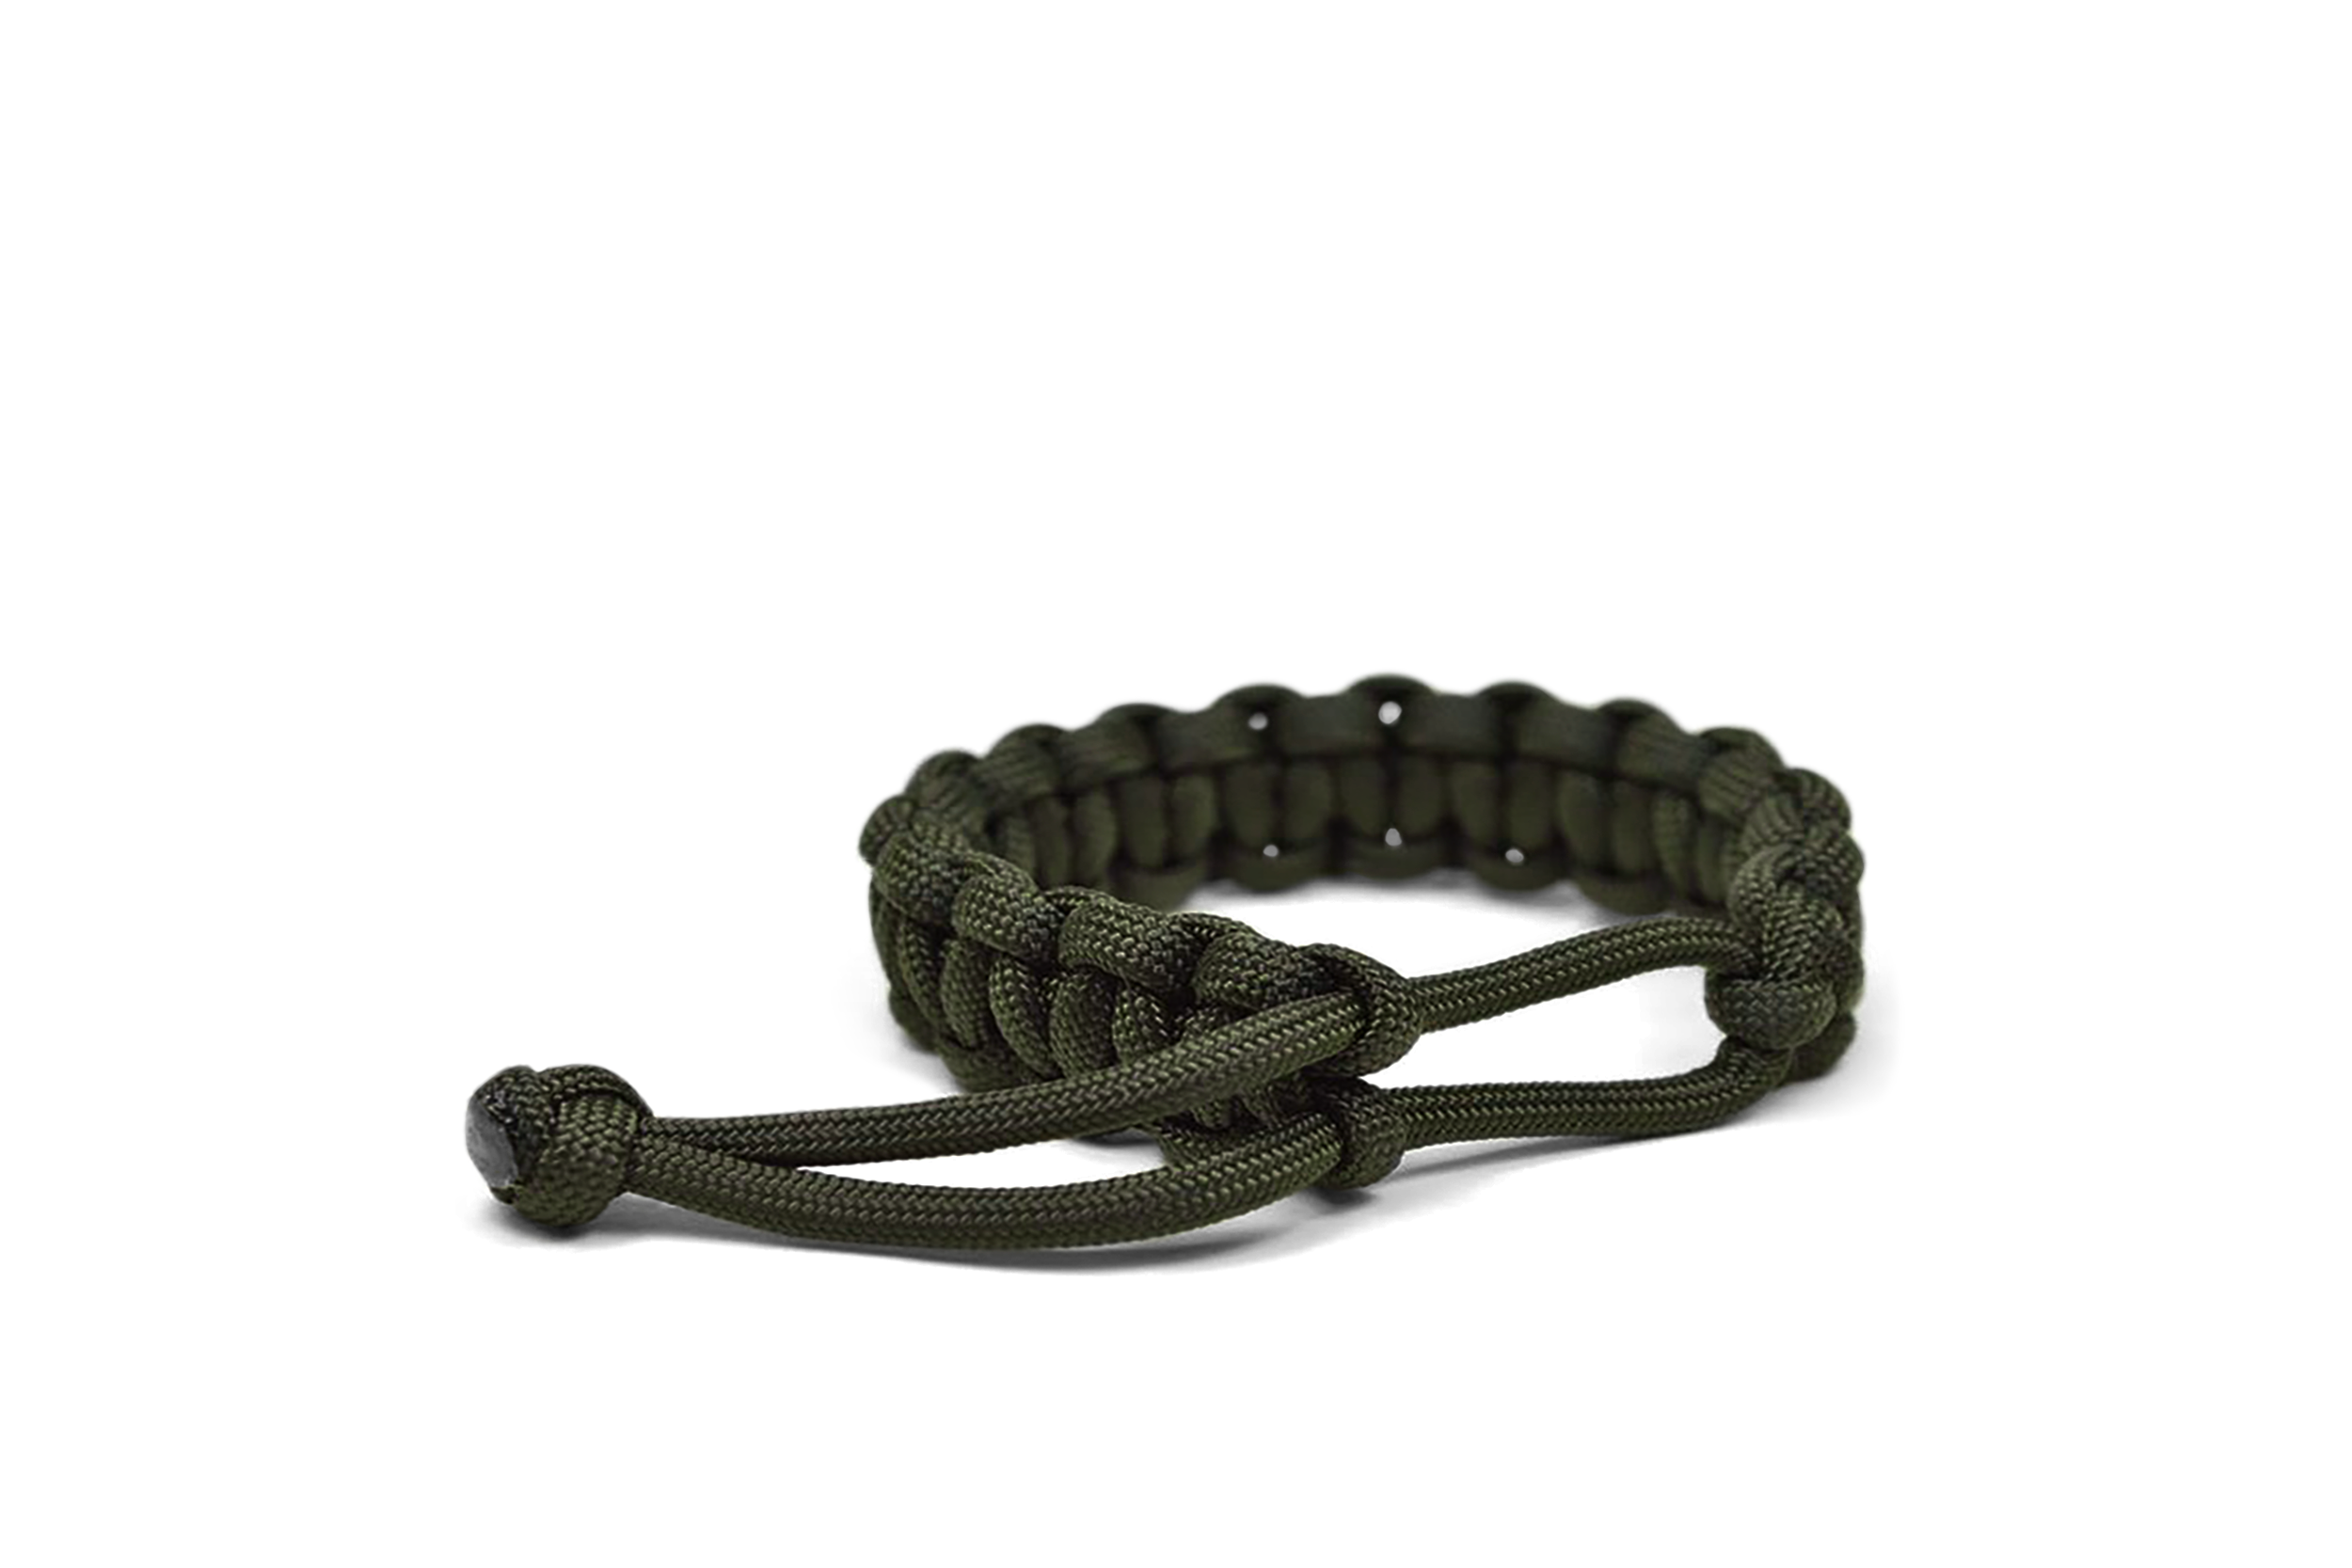 GENUINE 550 military spec paracord bracelets|Men's style|Jewelry for men|Army bracelet|Men's accessories|Men's gift|Birthday gift for him